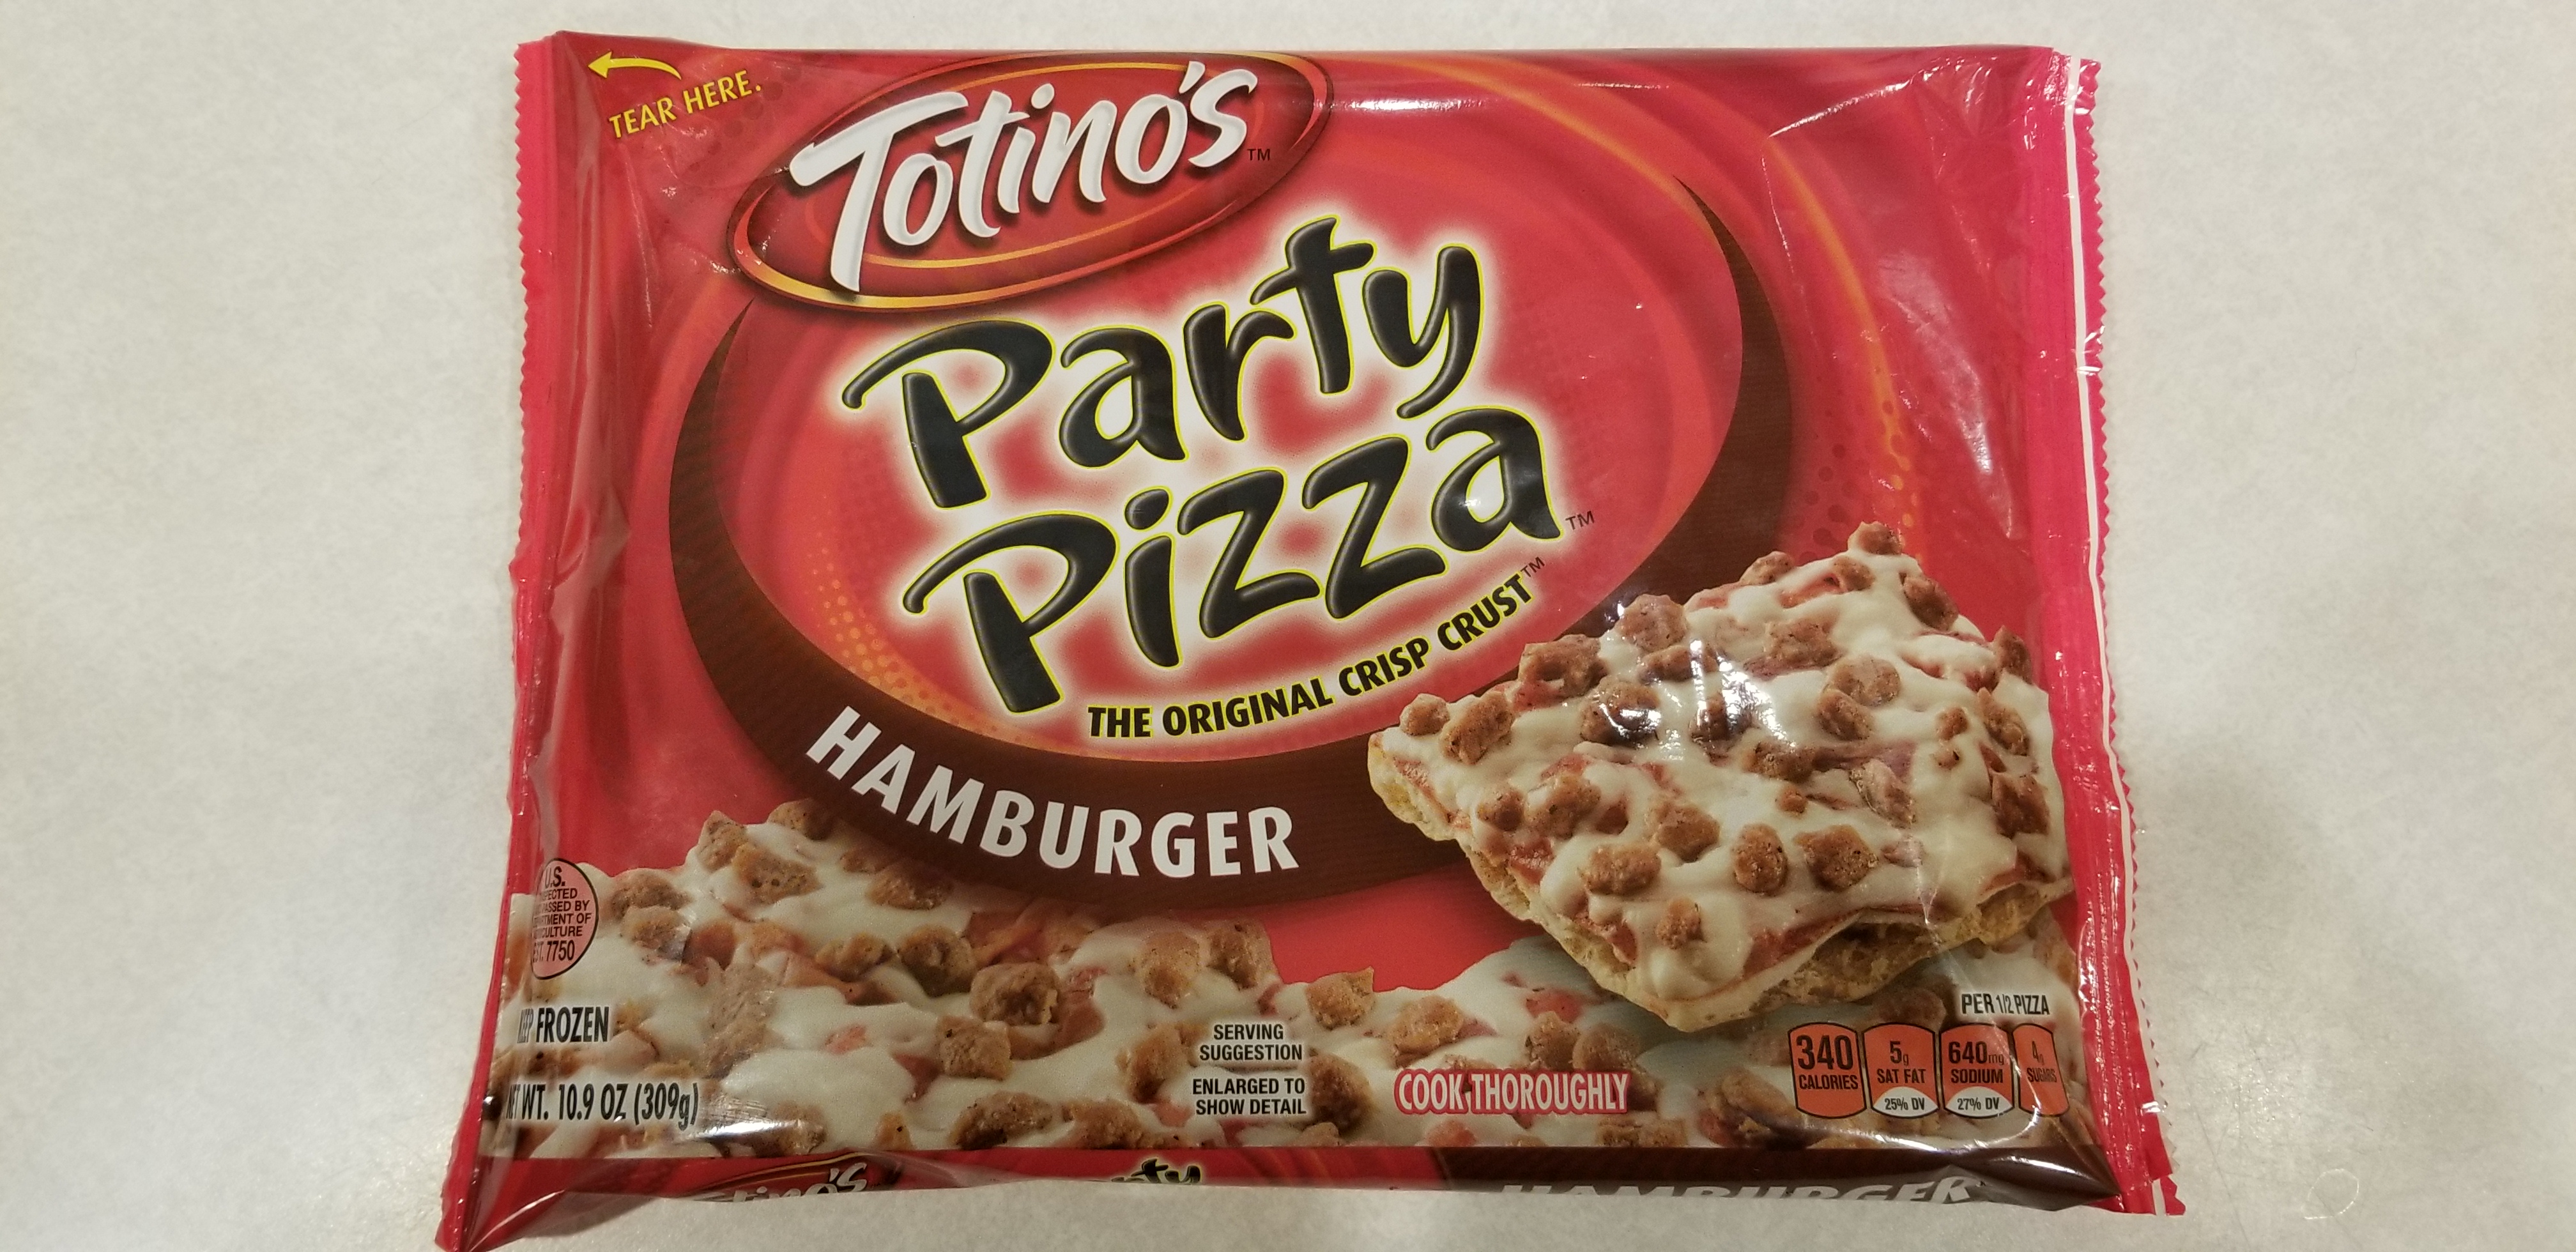 Totino's Party Pizza Hamburger Square Packaging